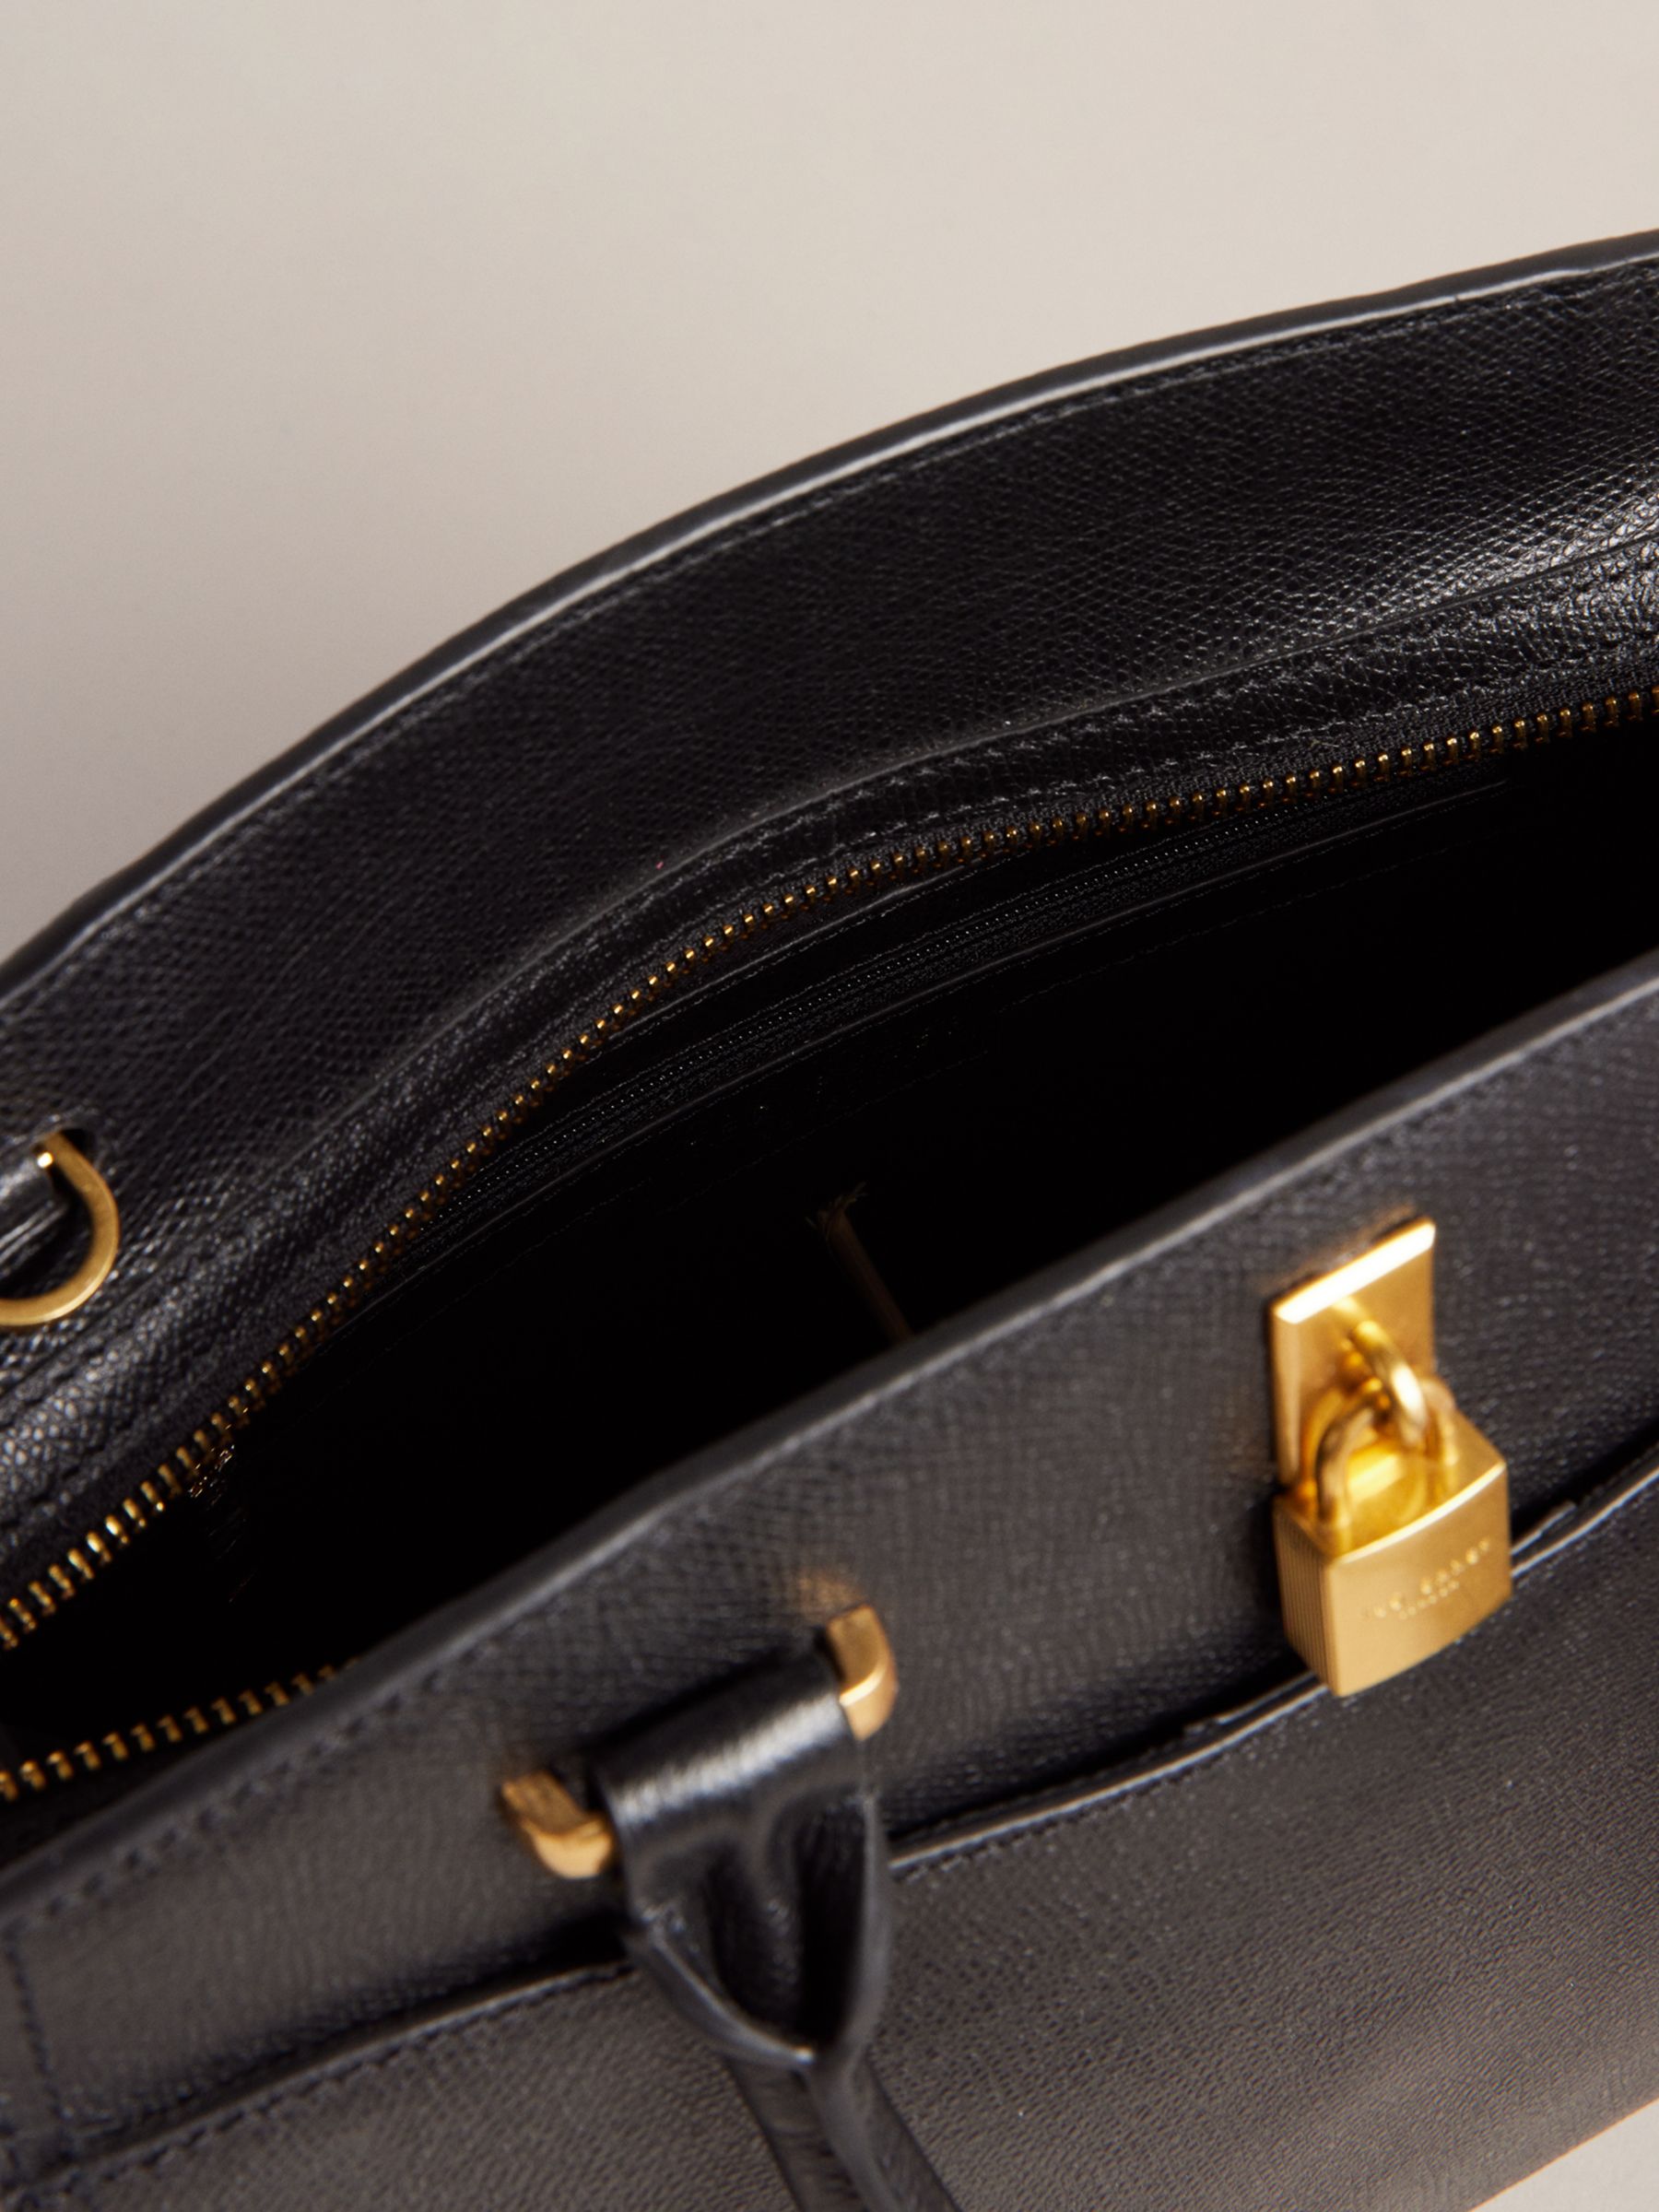 Ted Baker Myfair Leather Grab Bag, Black Black at John Lewis & Partners